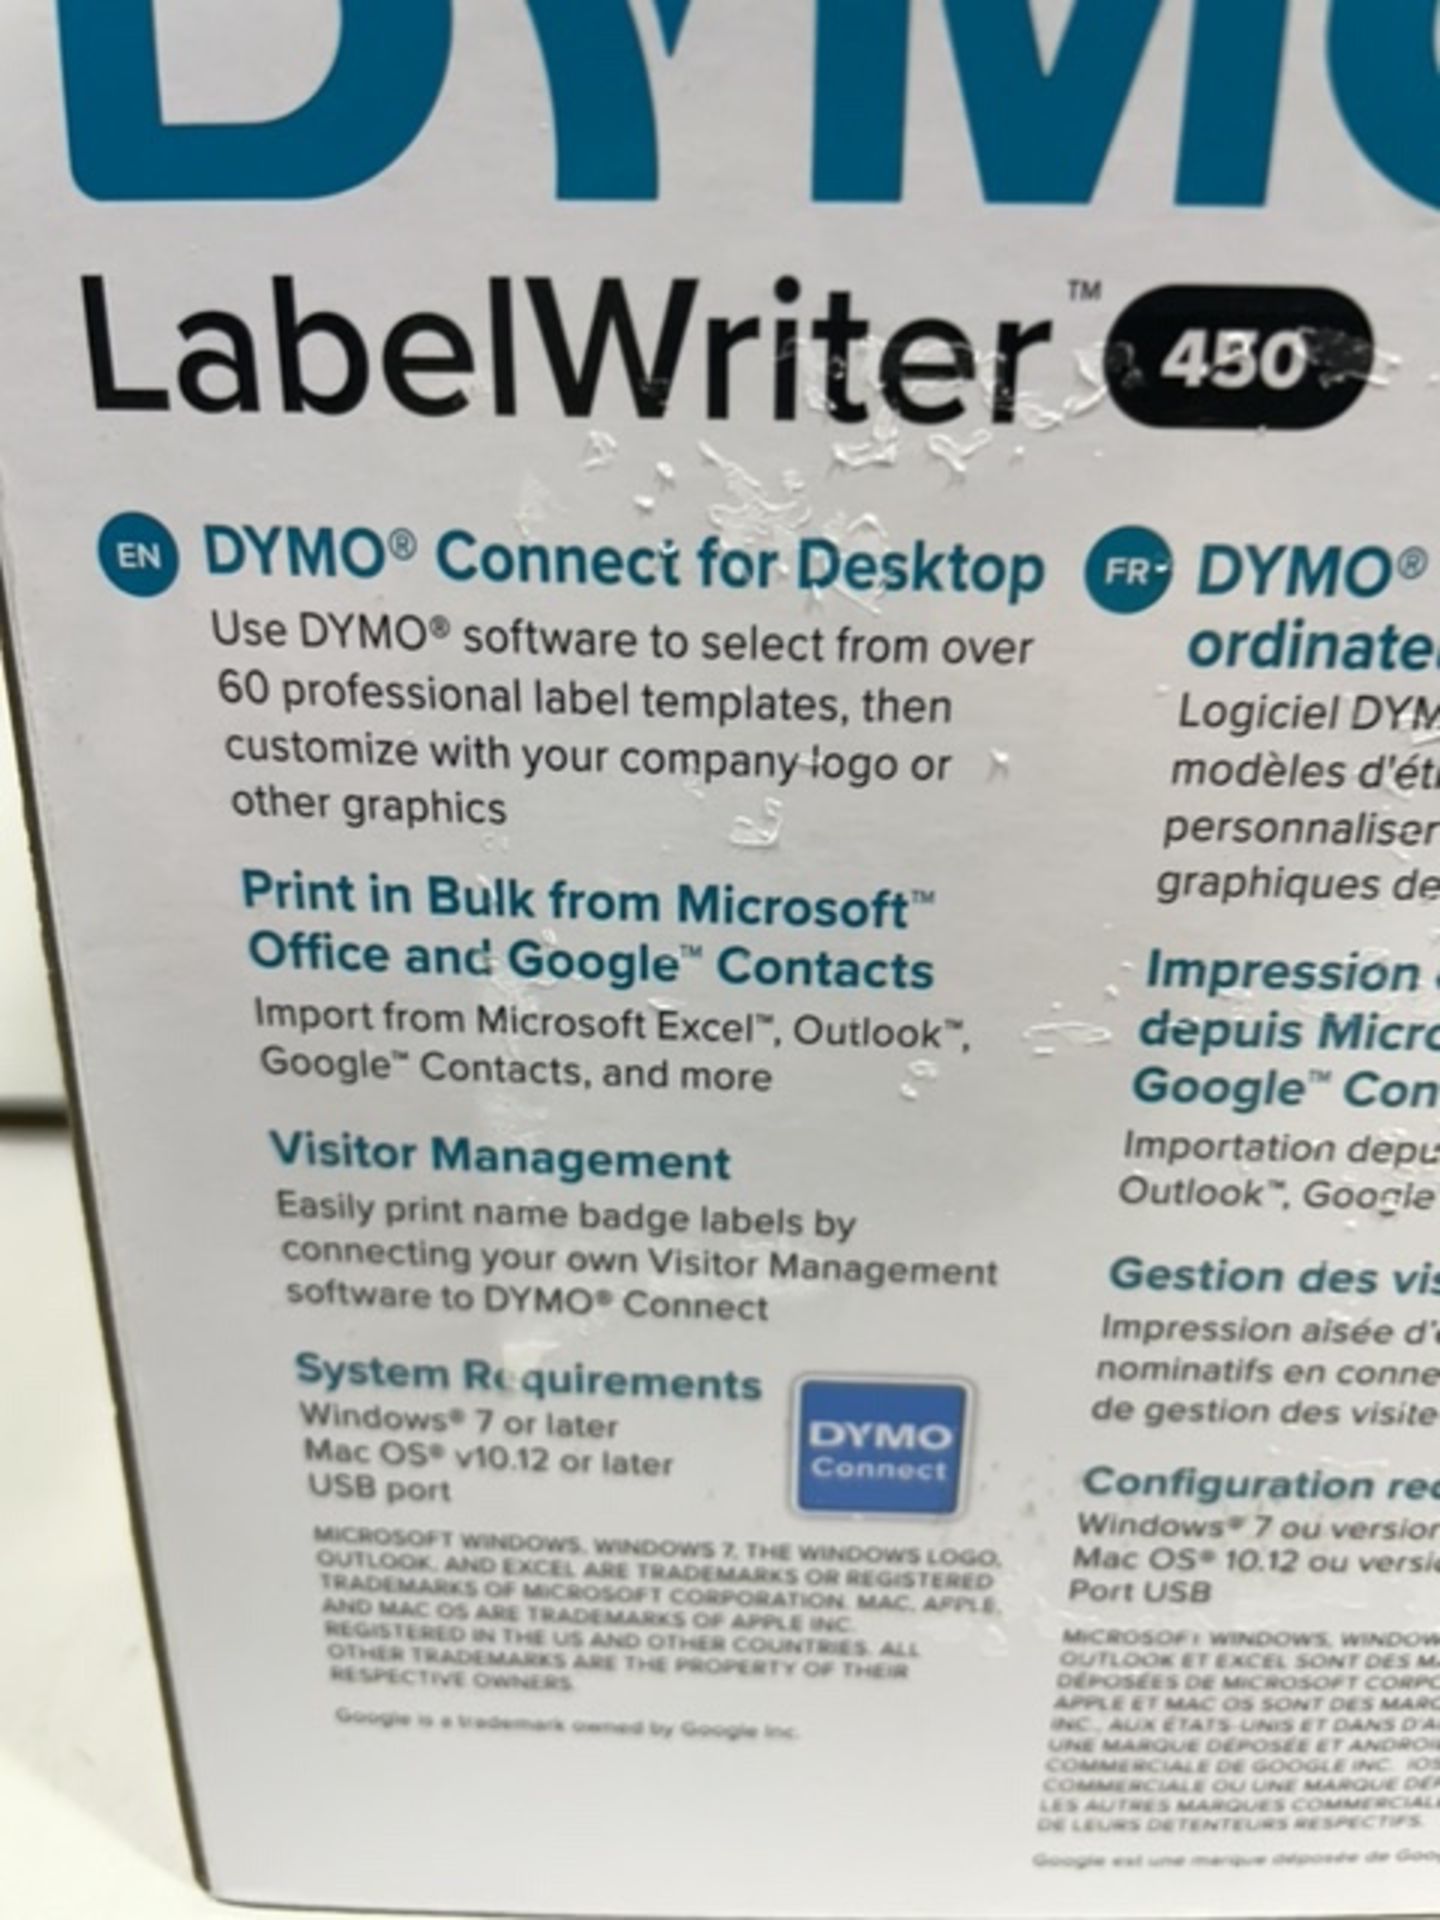 Dymo Label Writer - Image 3 of 3